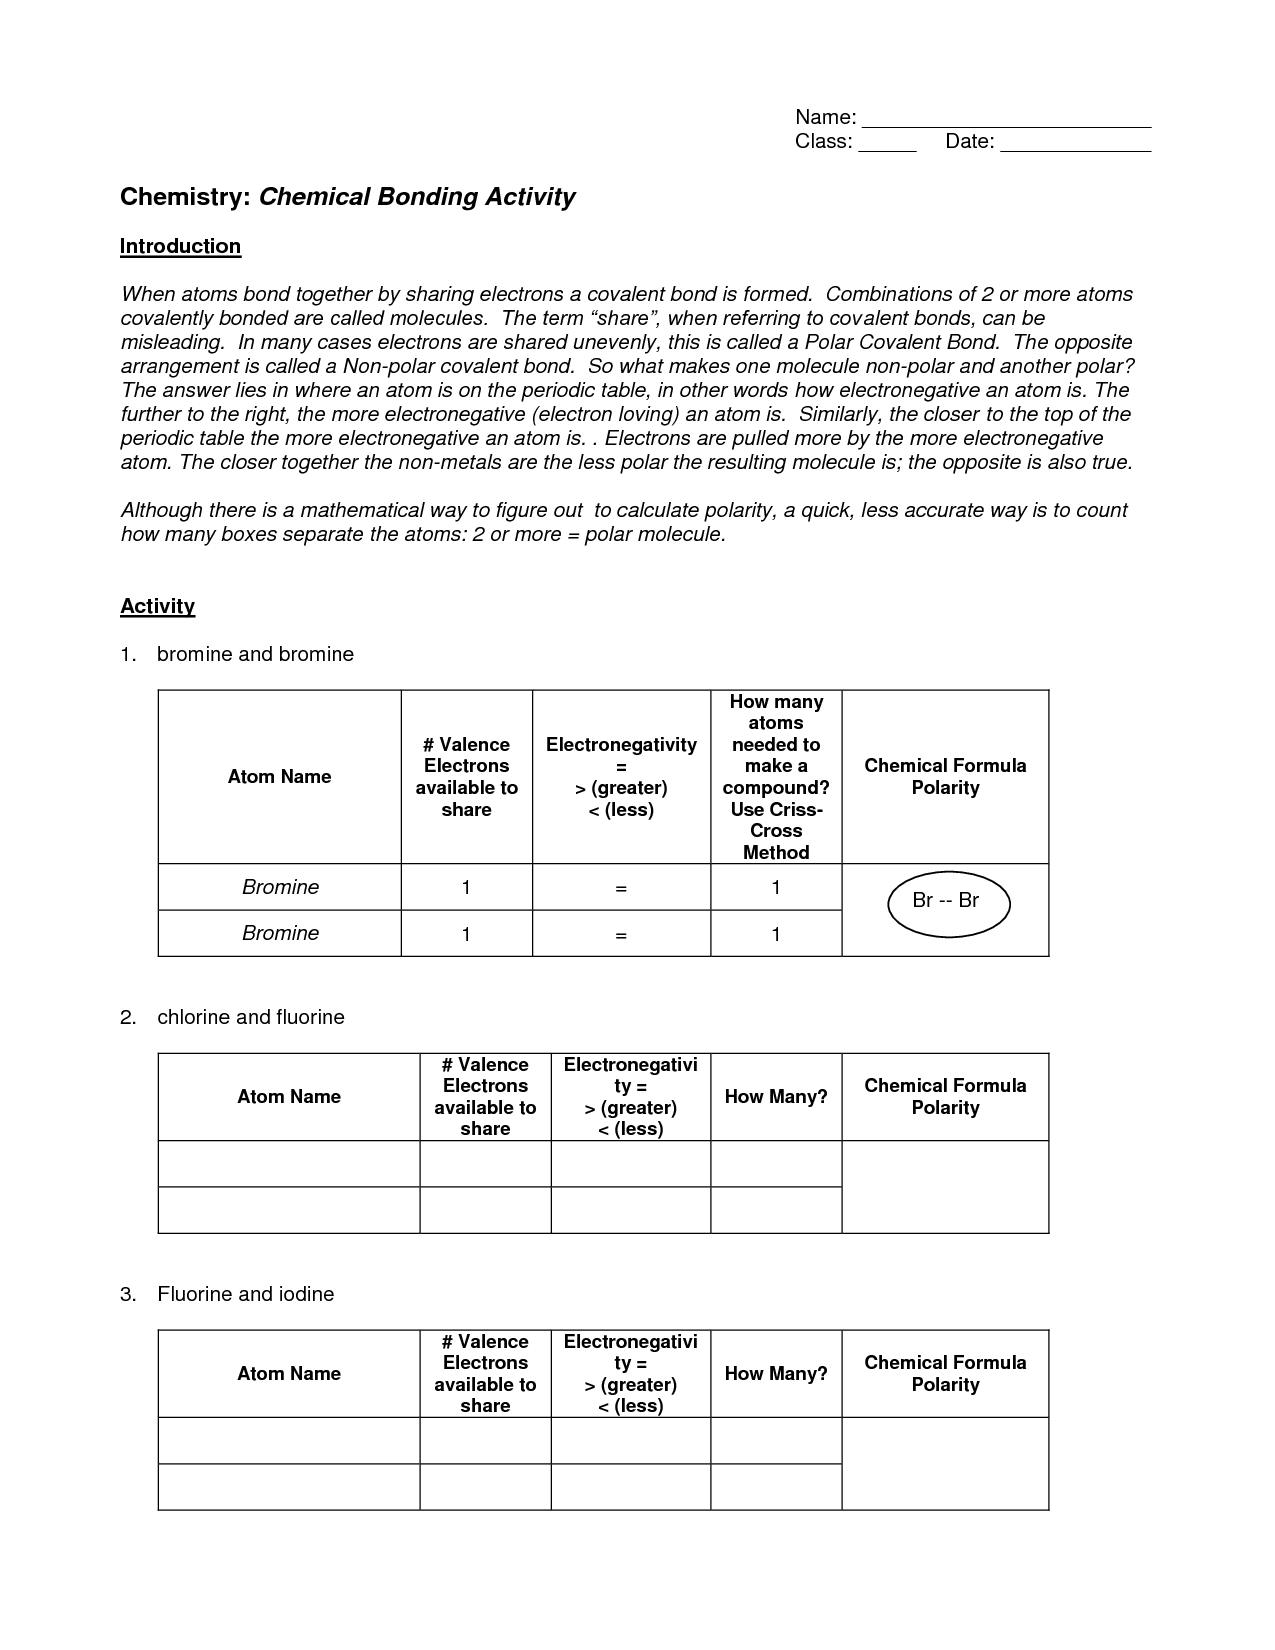 Ionic Bonding Worksheet Key